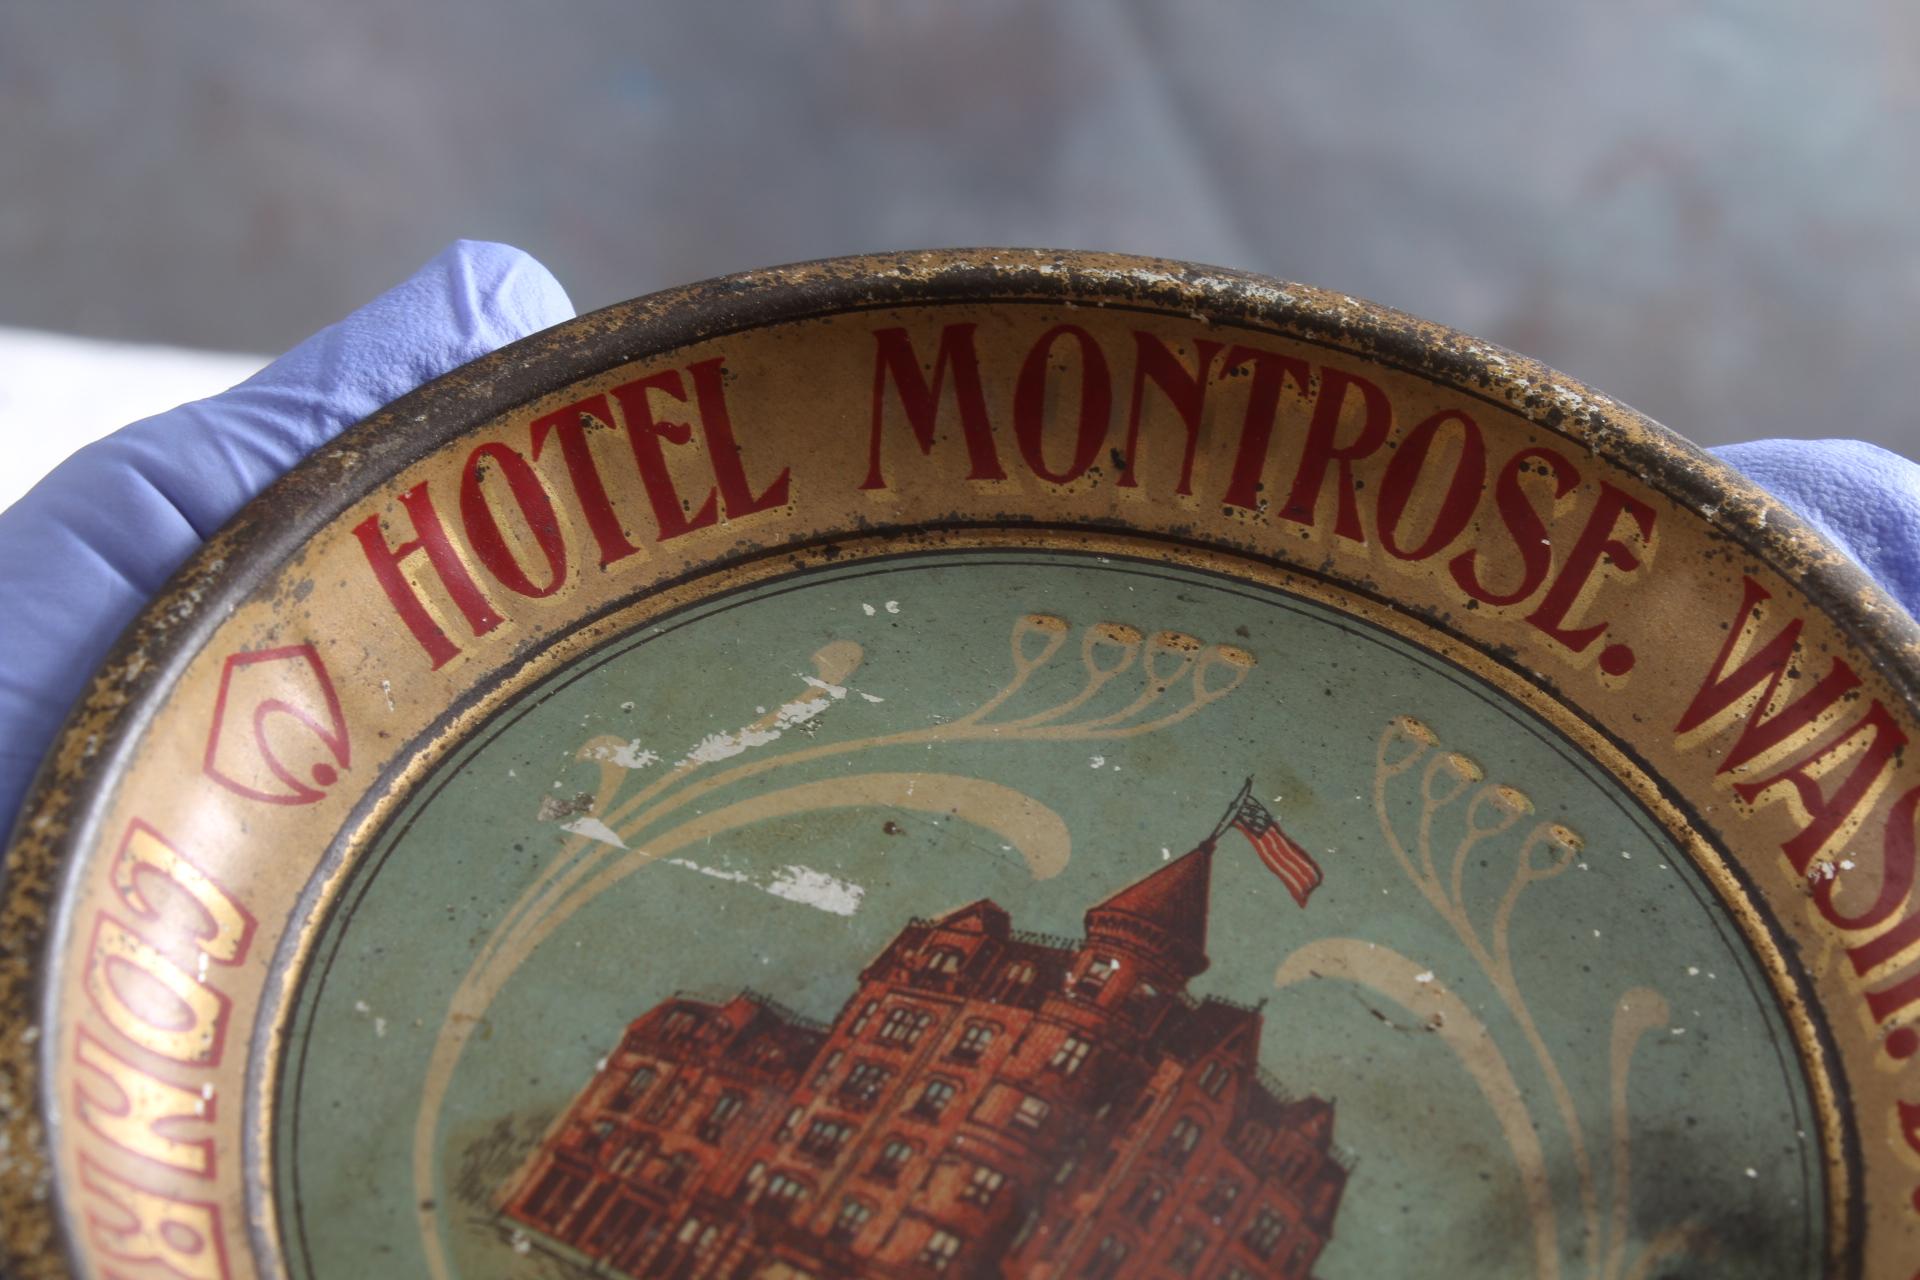 Antique Advertising Tip Tray Hotel Montrose, Washington D.C. 4 1/4" Diameter